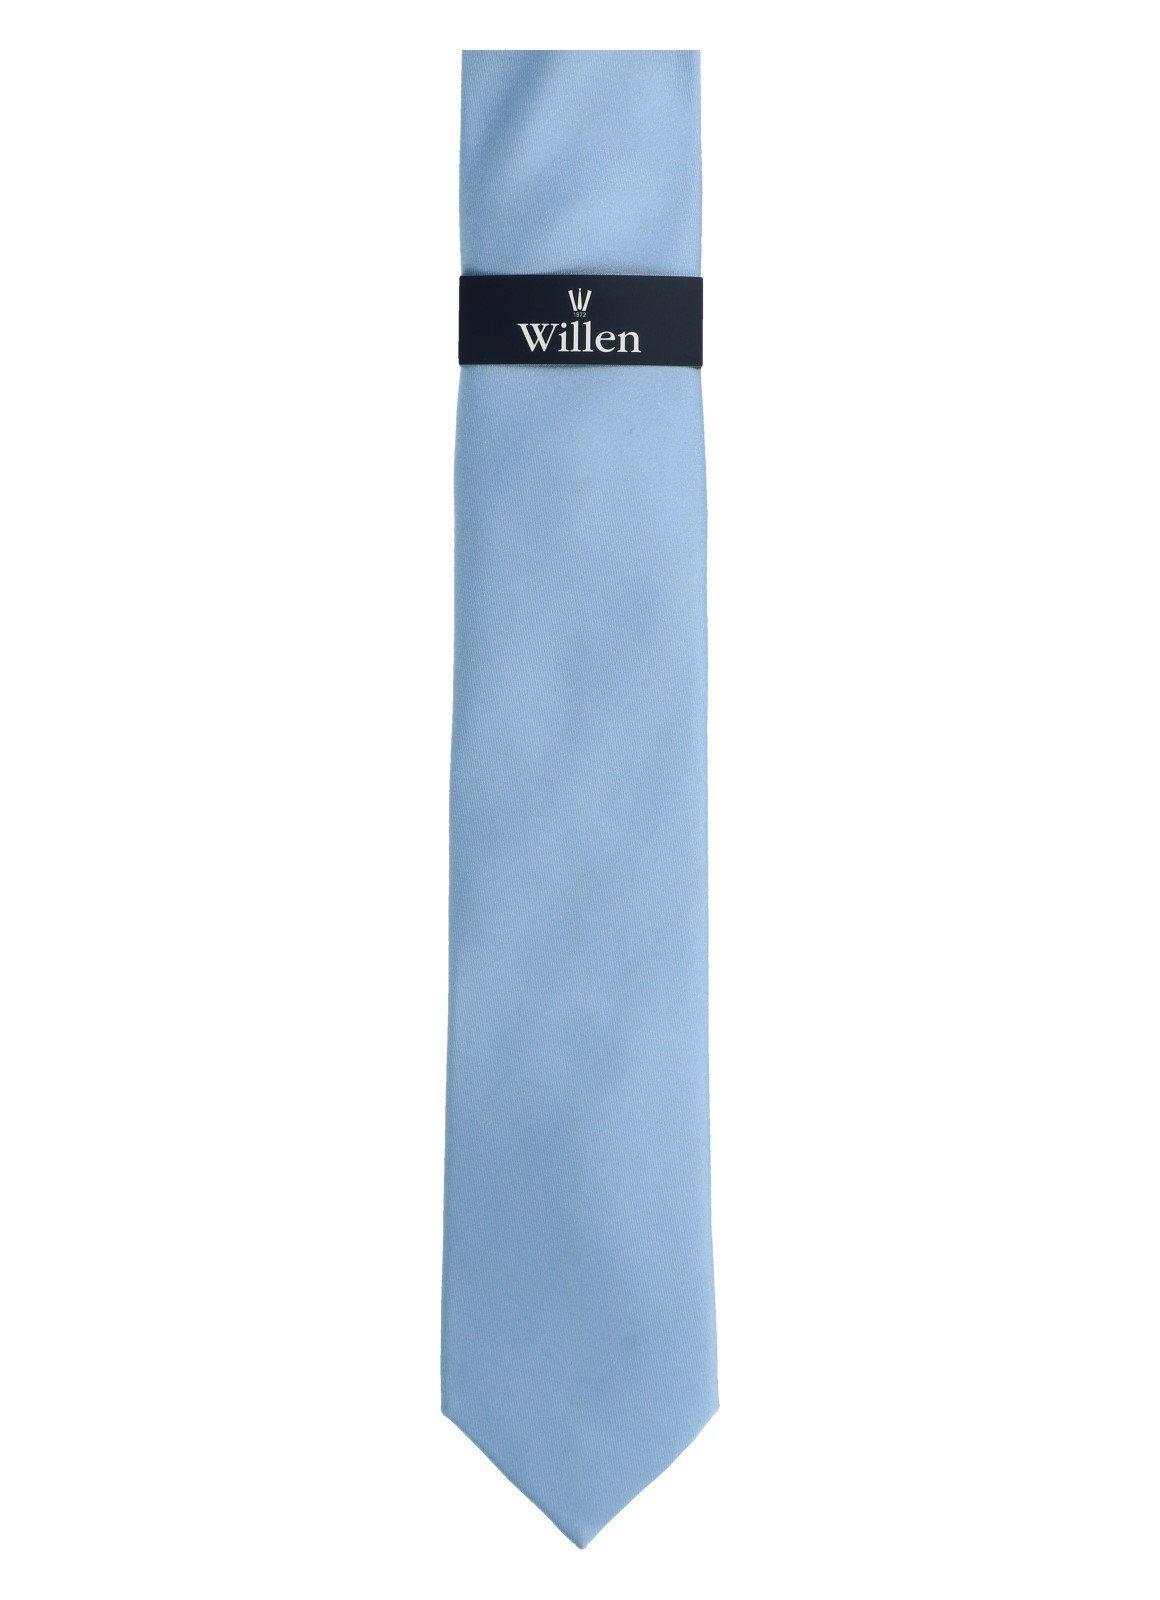 & Weste, WILLEN blau Hemd Krawatte/Fliege